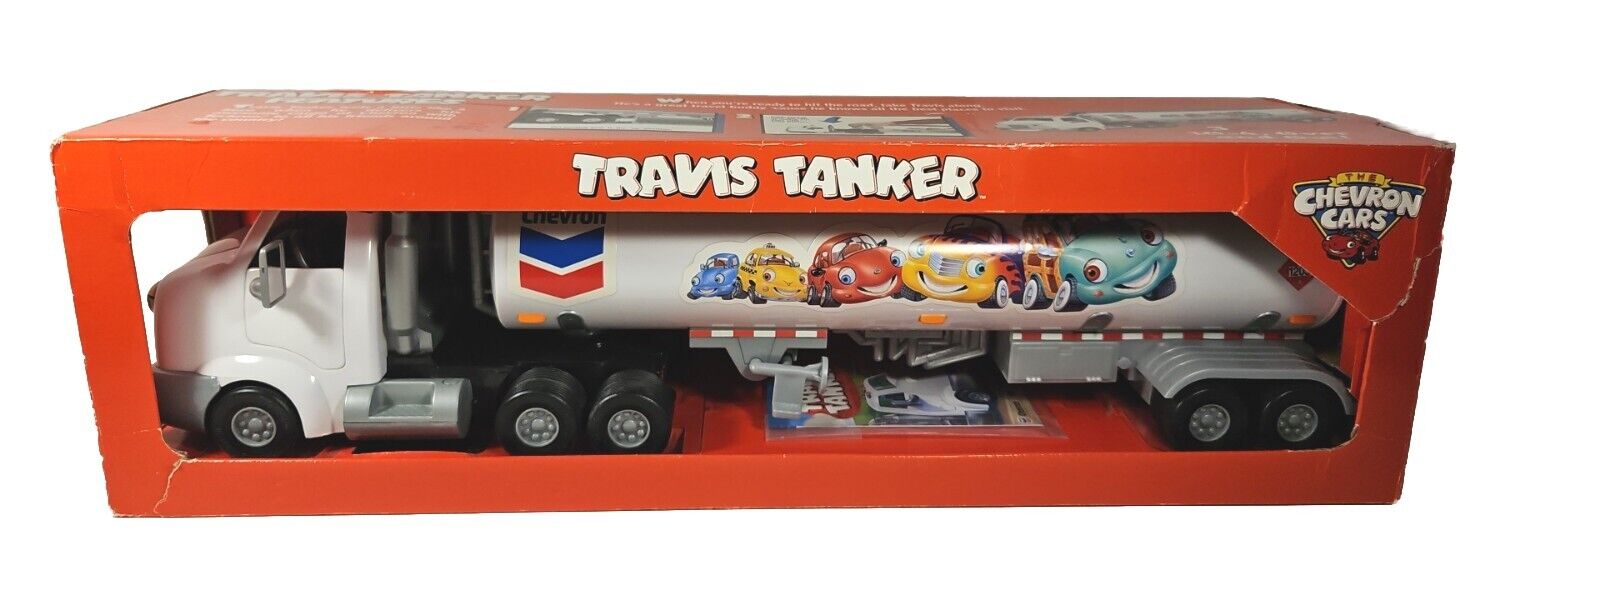 Rare TRAVIS TANKER Semi, The Chevron Cars 2005, For Collectors or Play, NEW